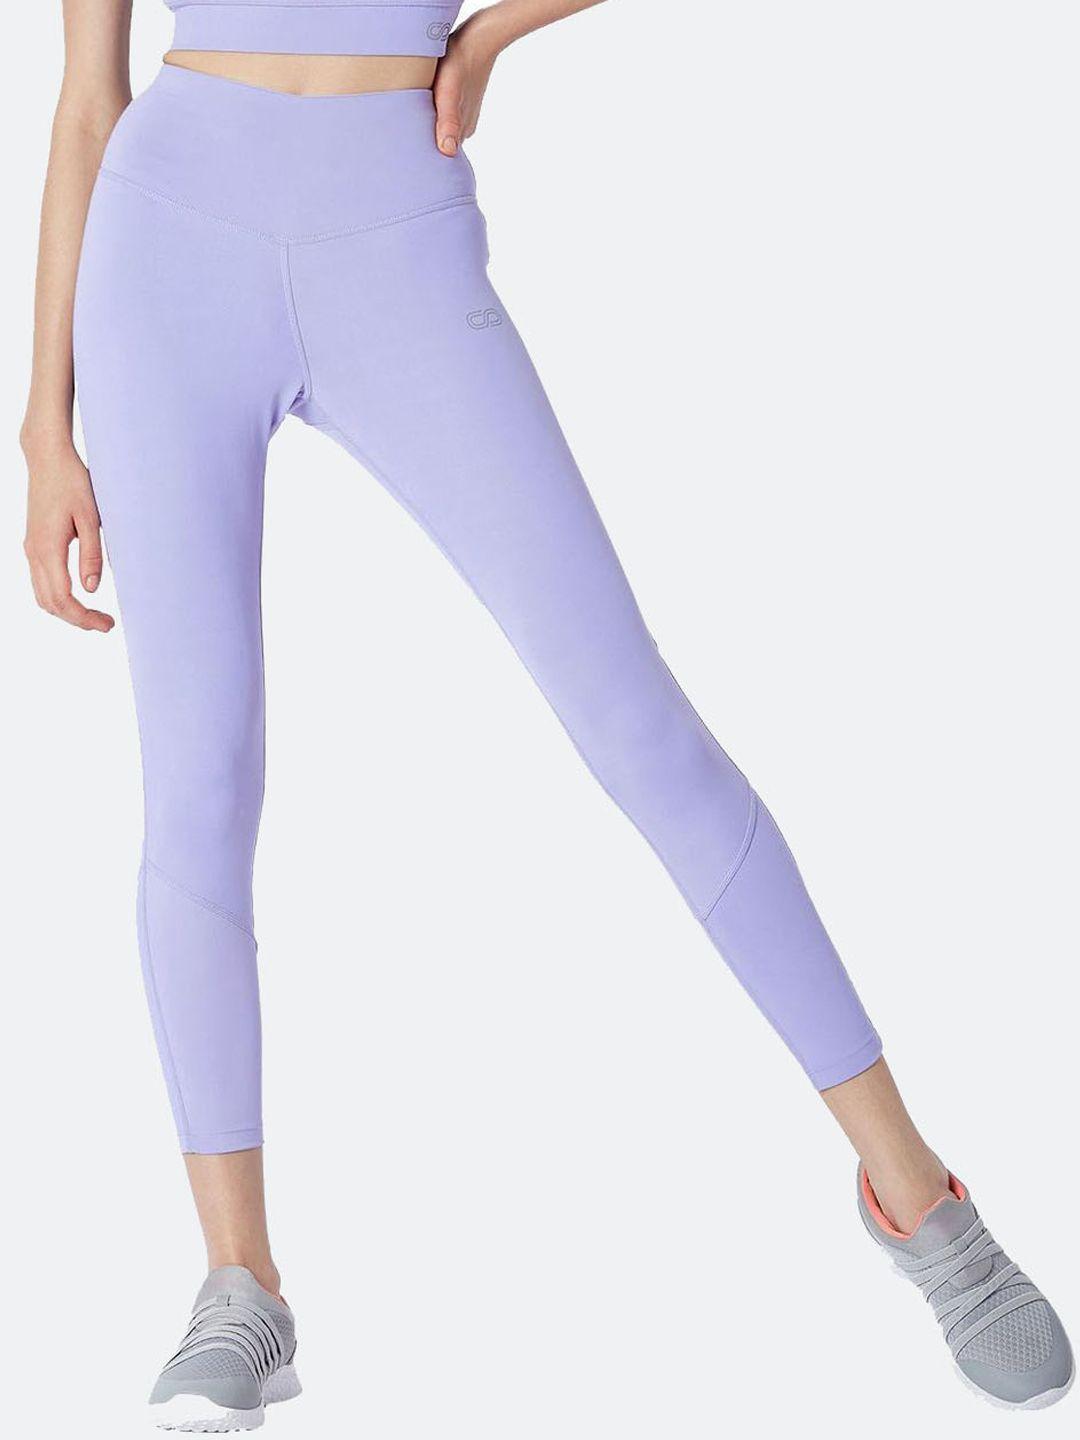 silvertraq-women-lavender-solid-quick-dry-anti-odor-cropped-leggings